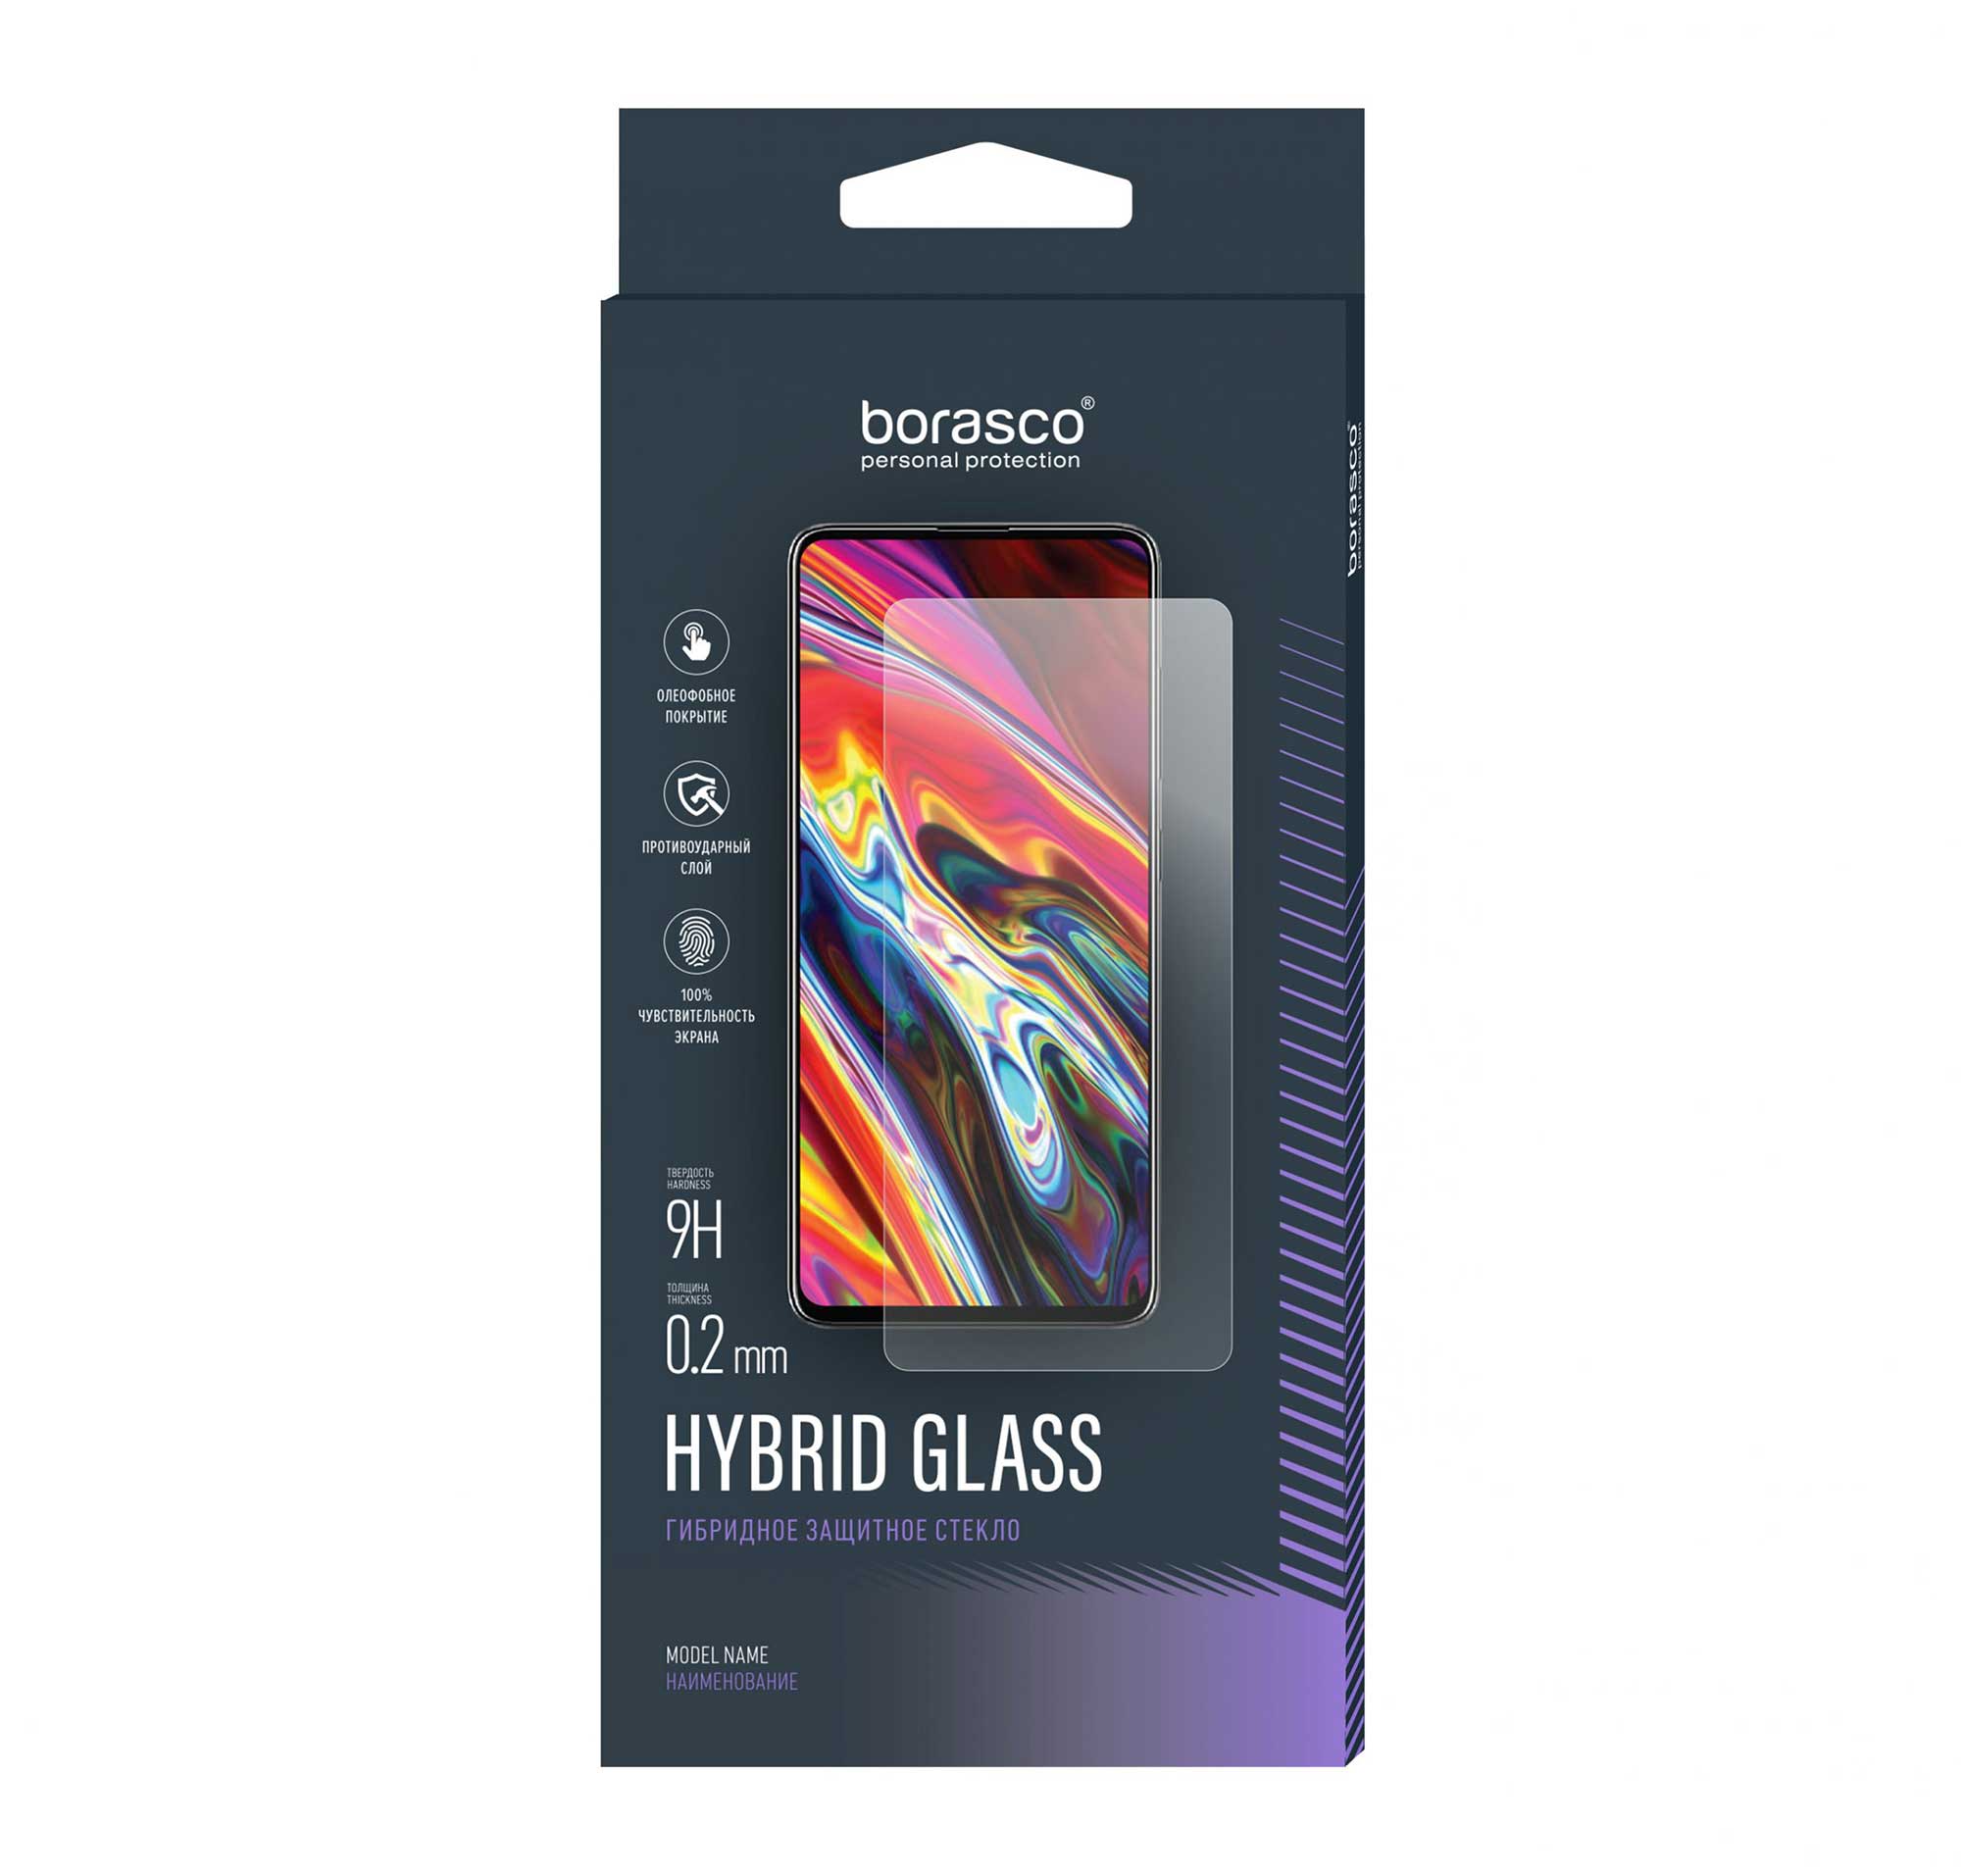 Защитное стекло Hybrid Glass для Realme C20/ С21/ С11 (2021) стекло защитное borasco hybrid glass realme c20 с21 c21y с11 2021 c25 c25s прозрачное